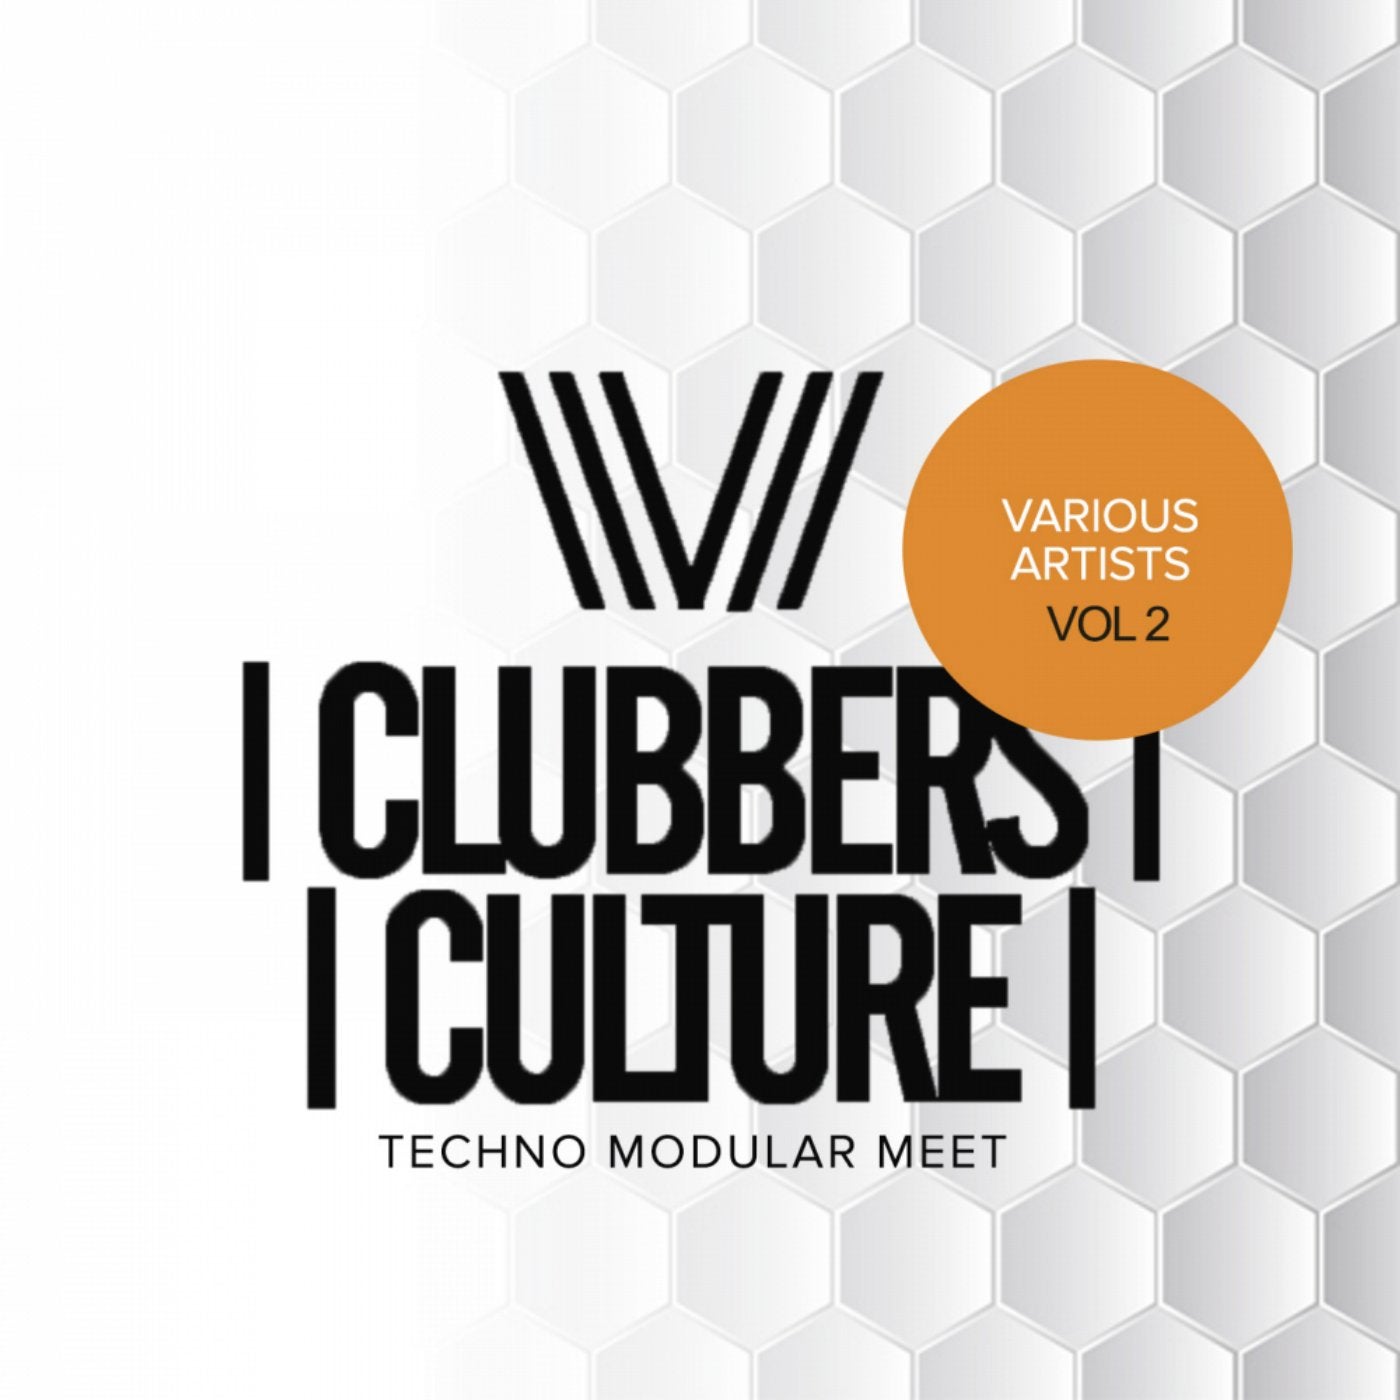 Clubbers Culture: Techno Modular Meet, Vol.2